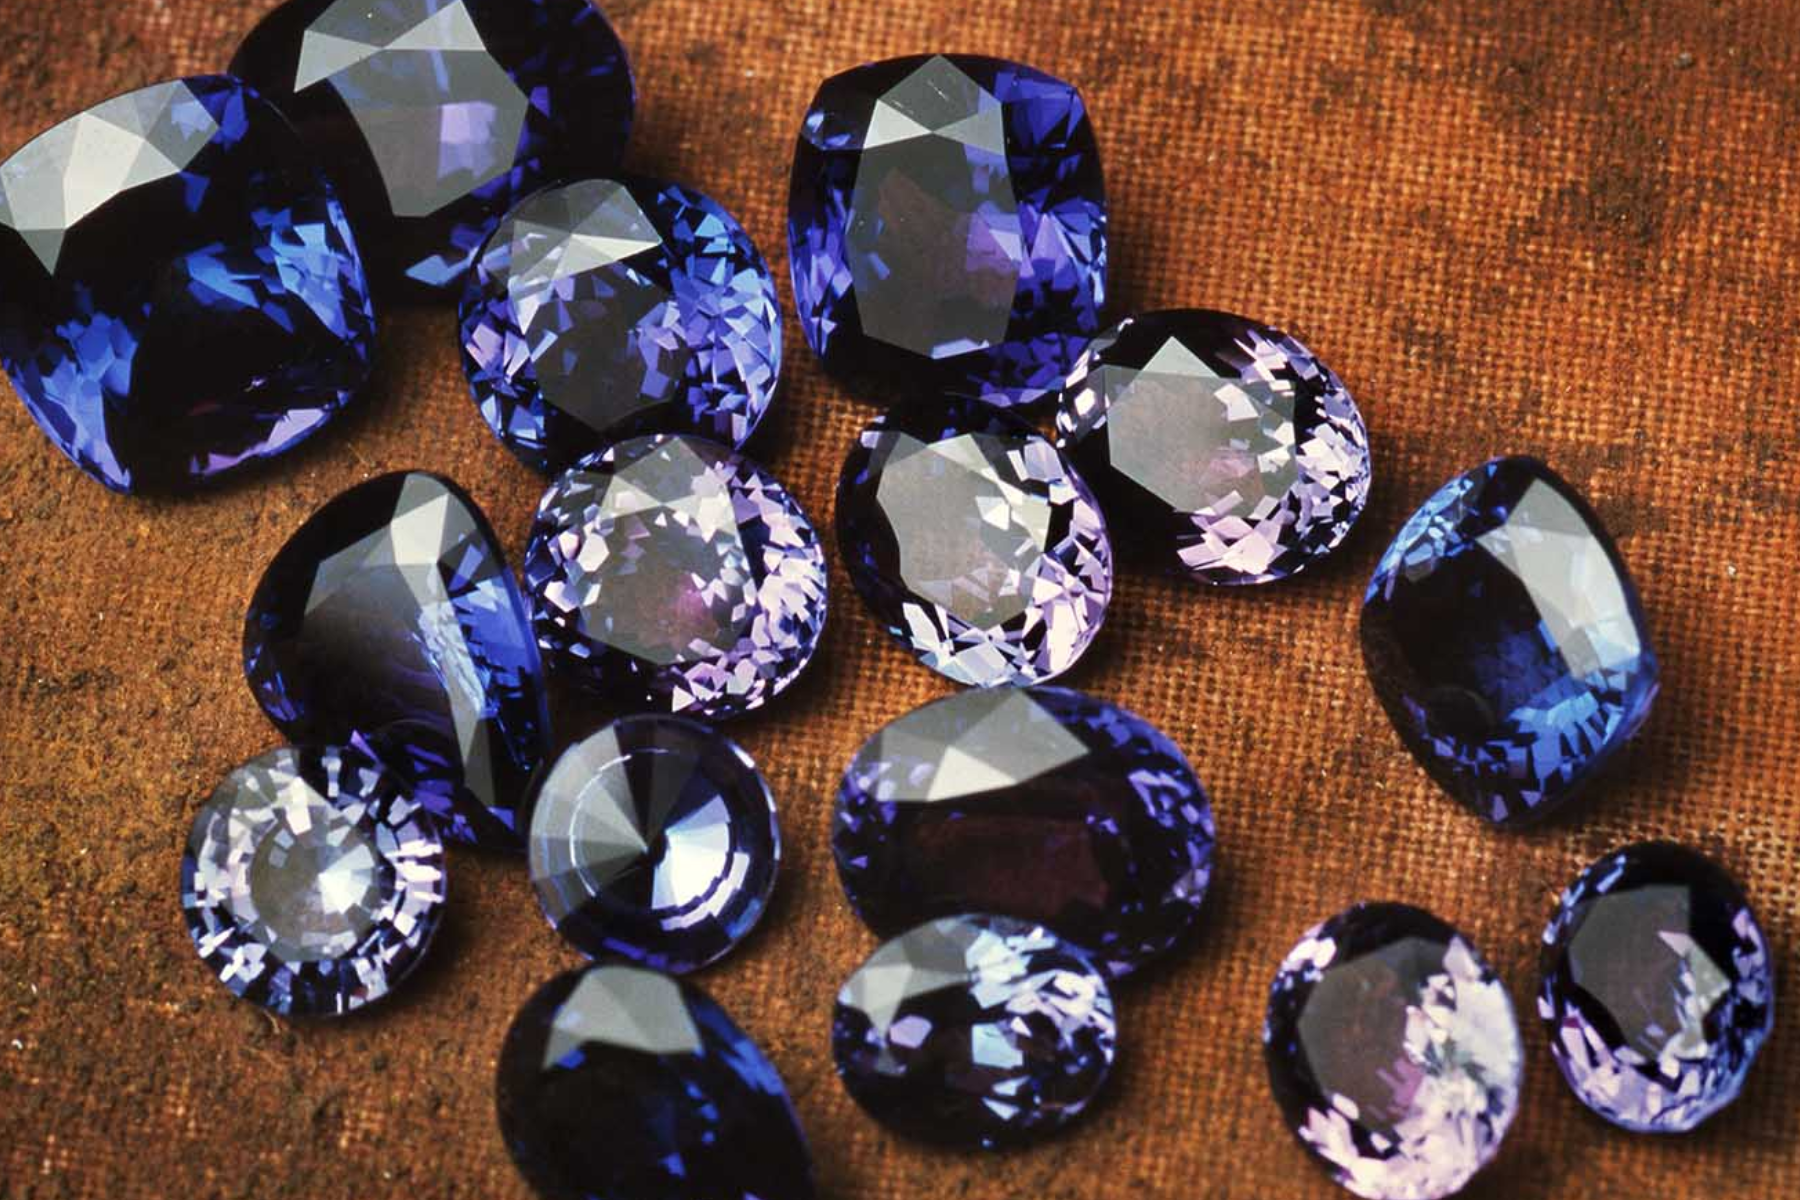 A group of sixteen blue gemstones